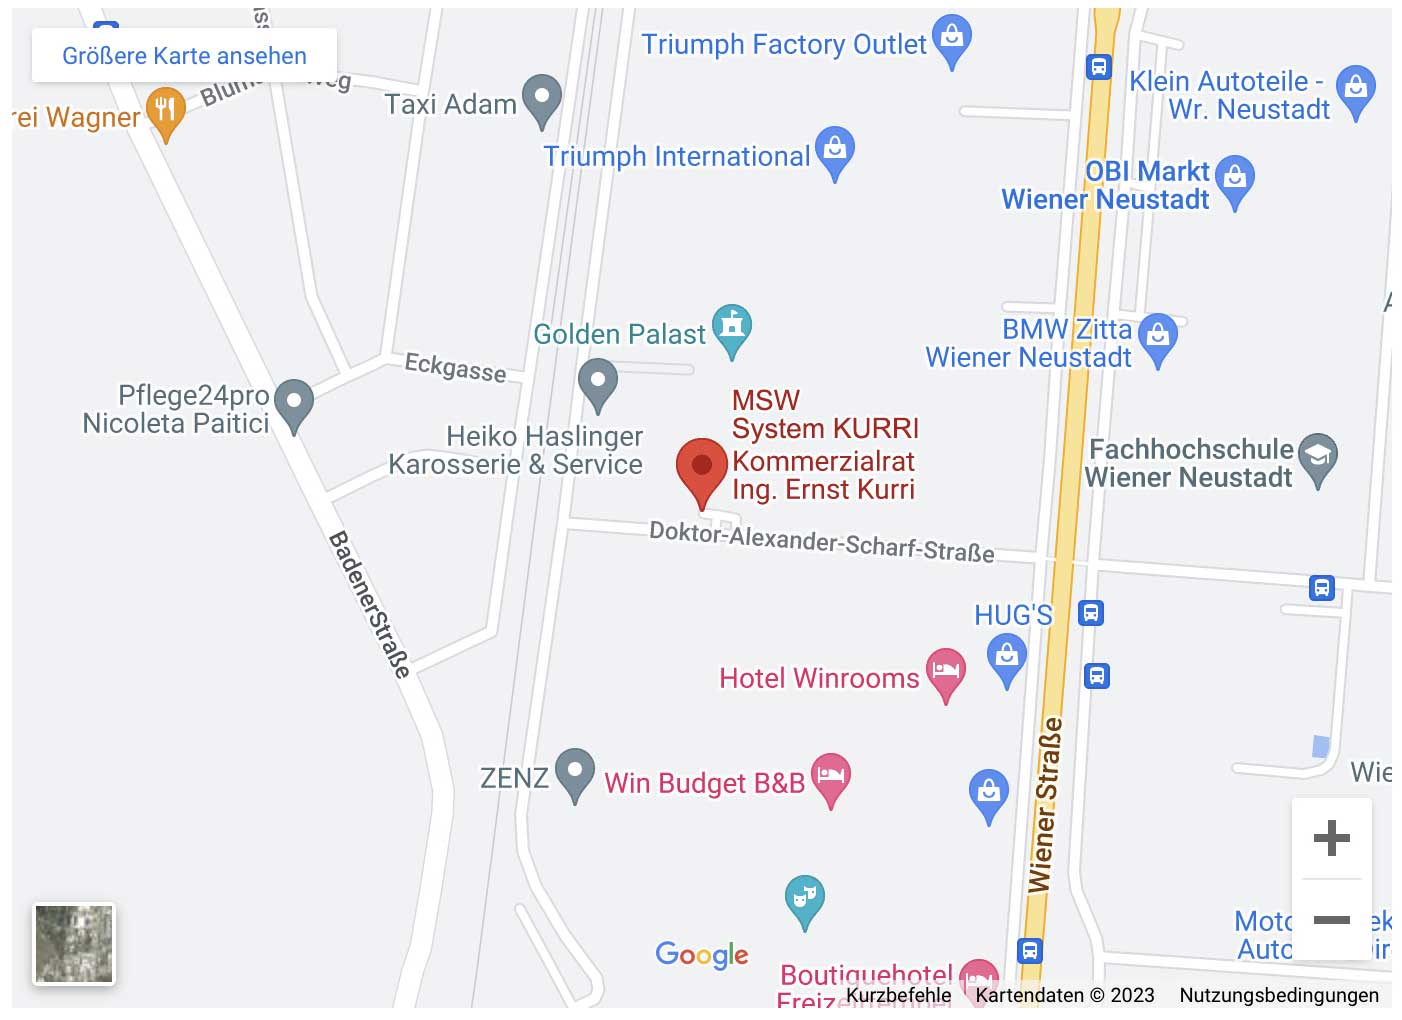 Google Map MSW KURRI